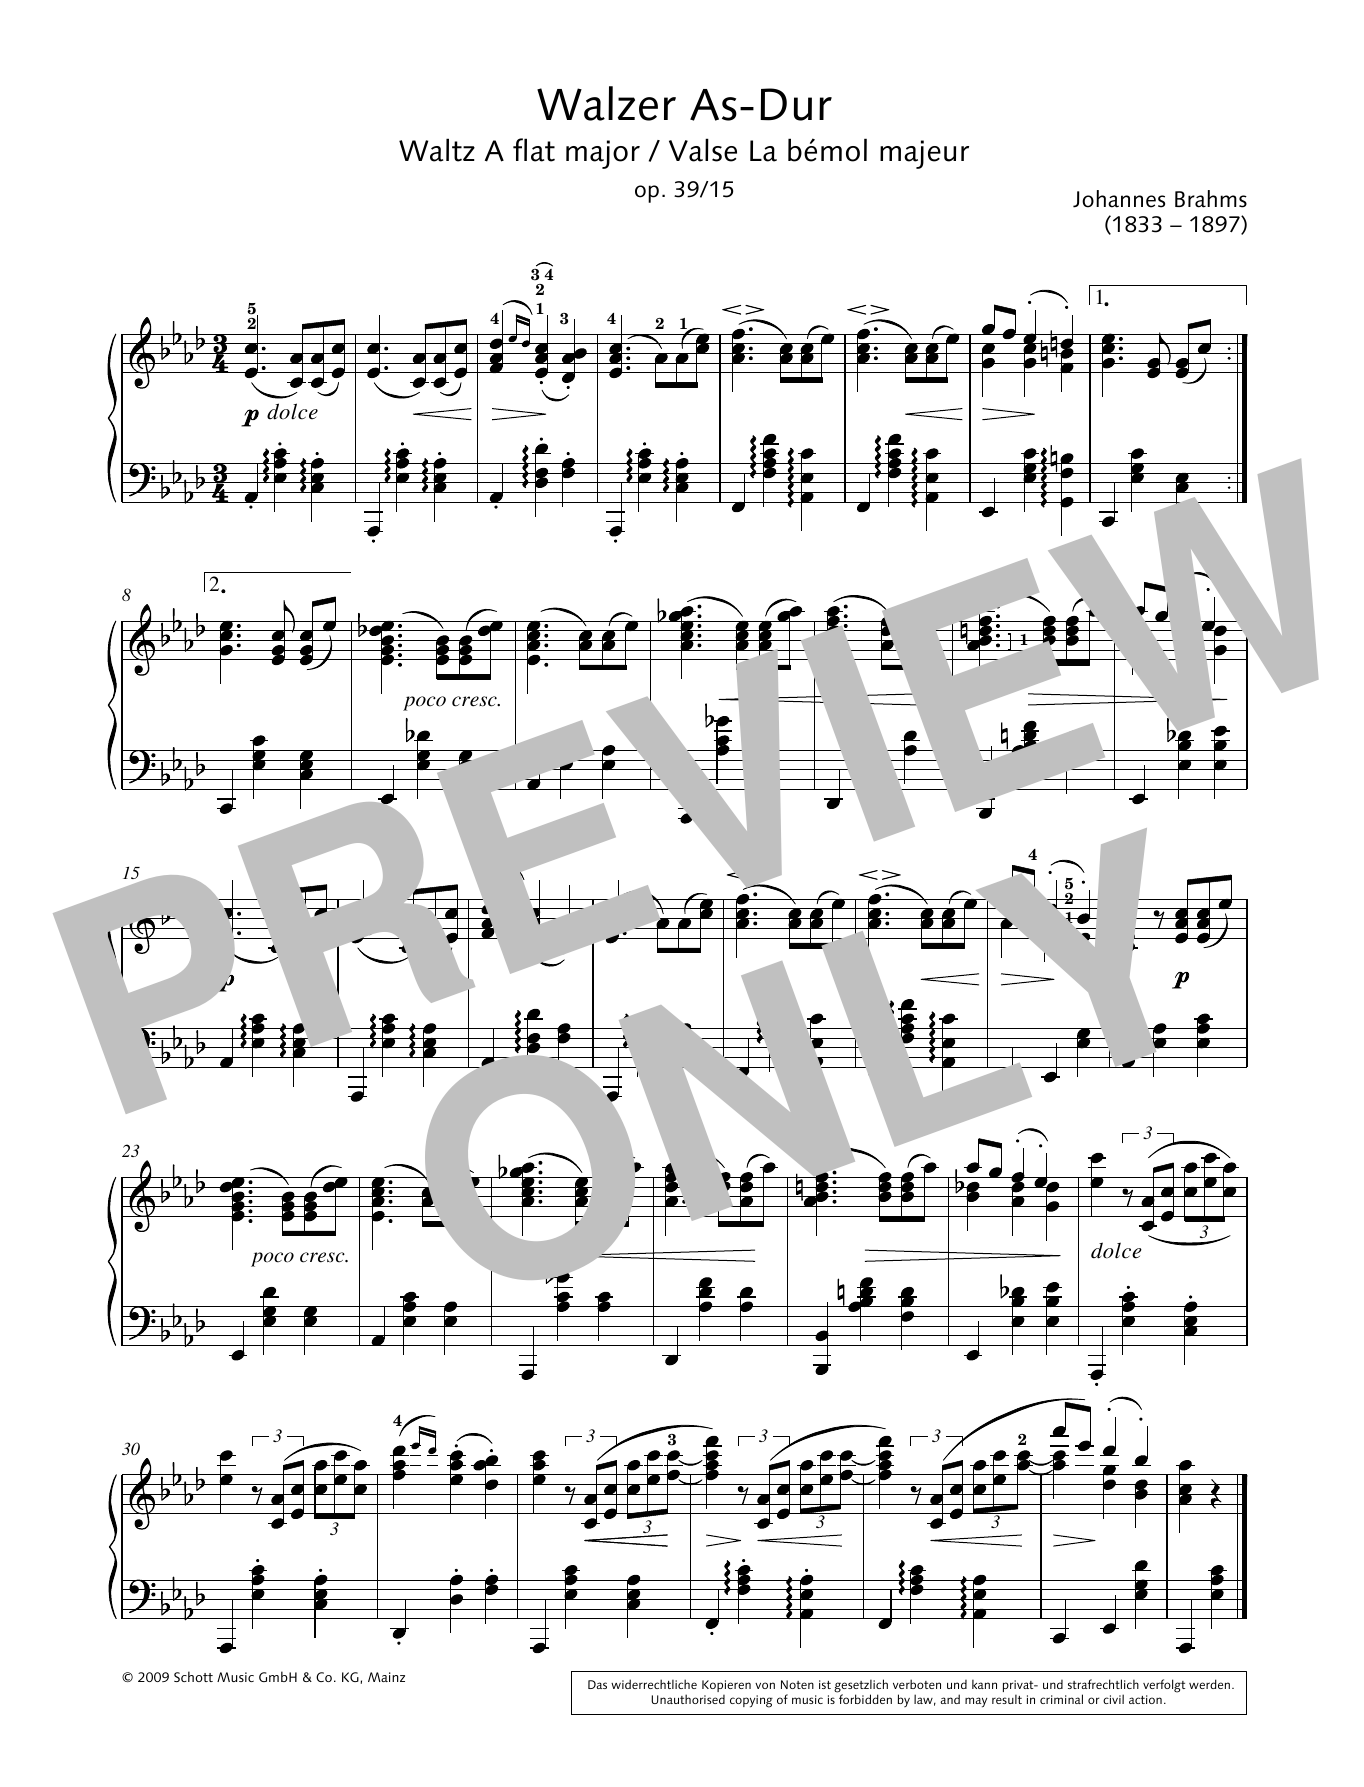 Hans-Gunter Heumann Waltz A-flat major Sheet Music Notes & Chords for Piano Solo - Download or Print PDF